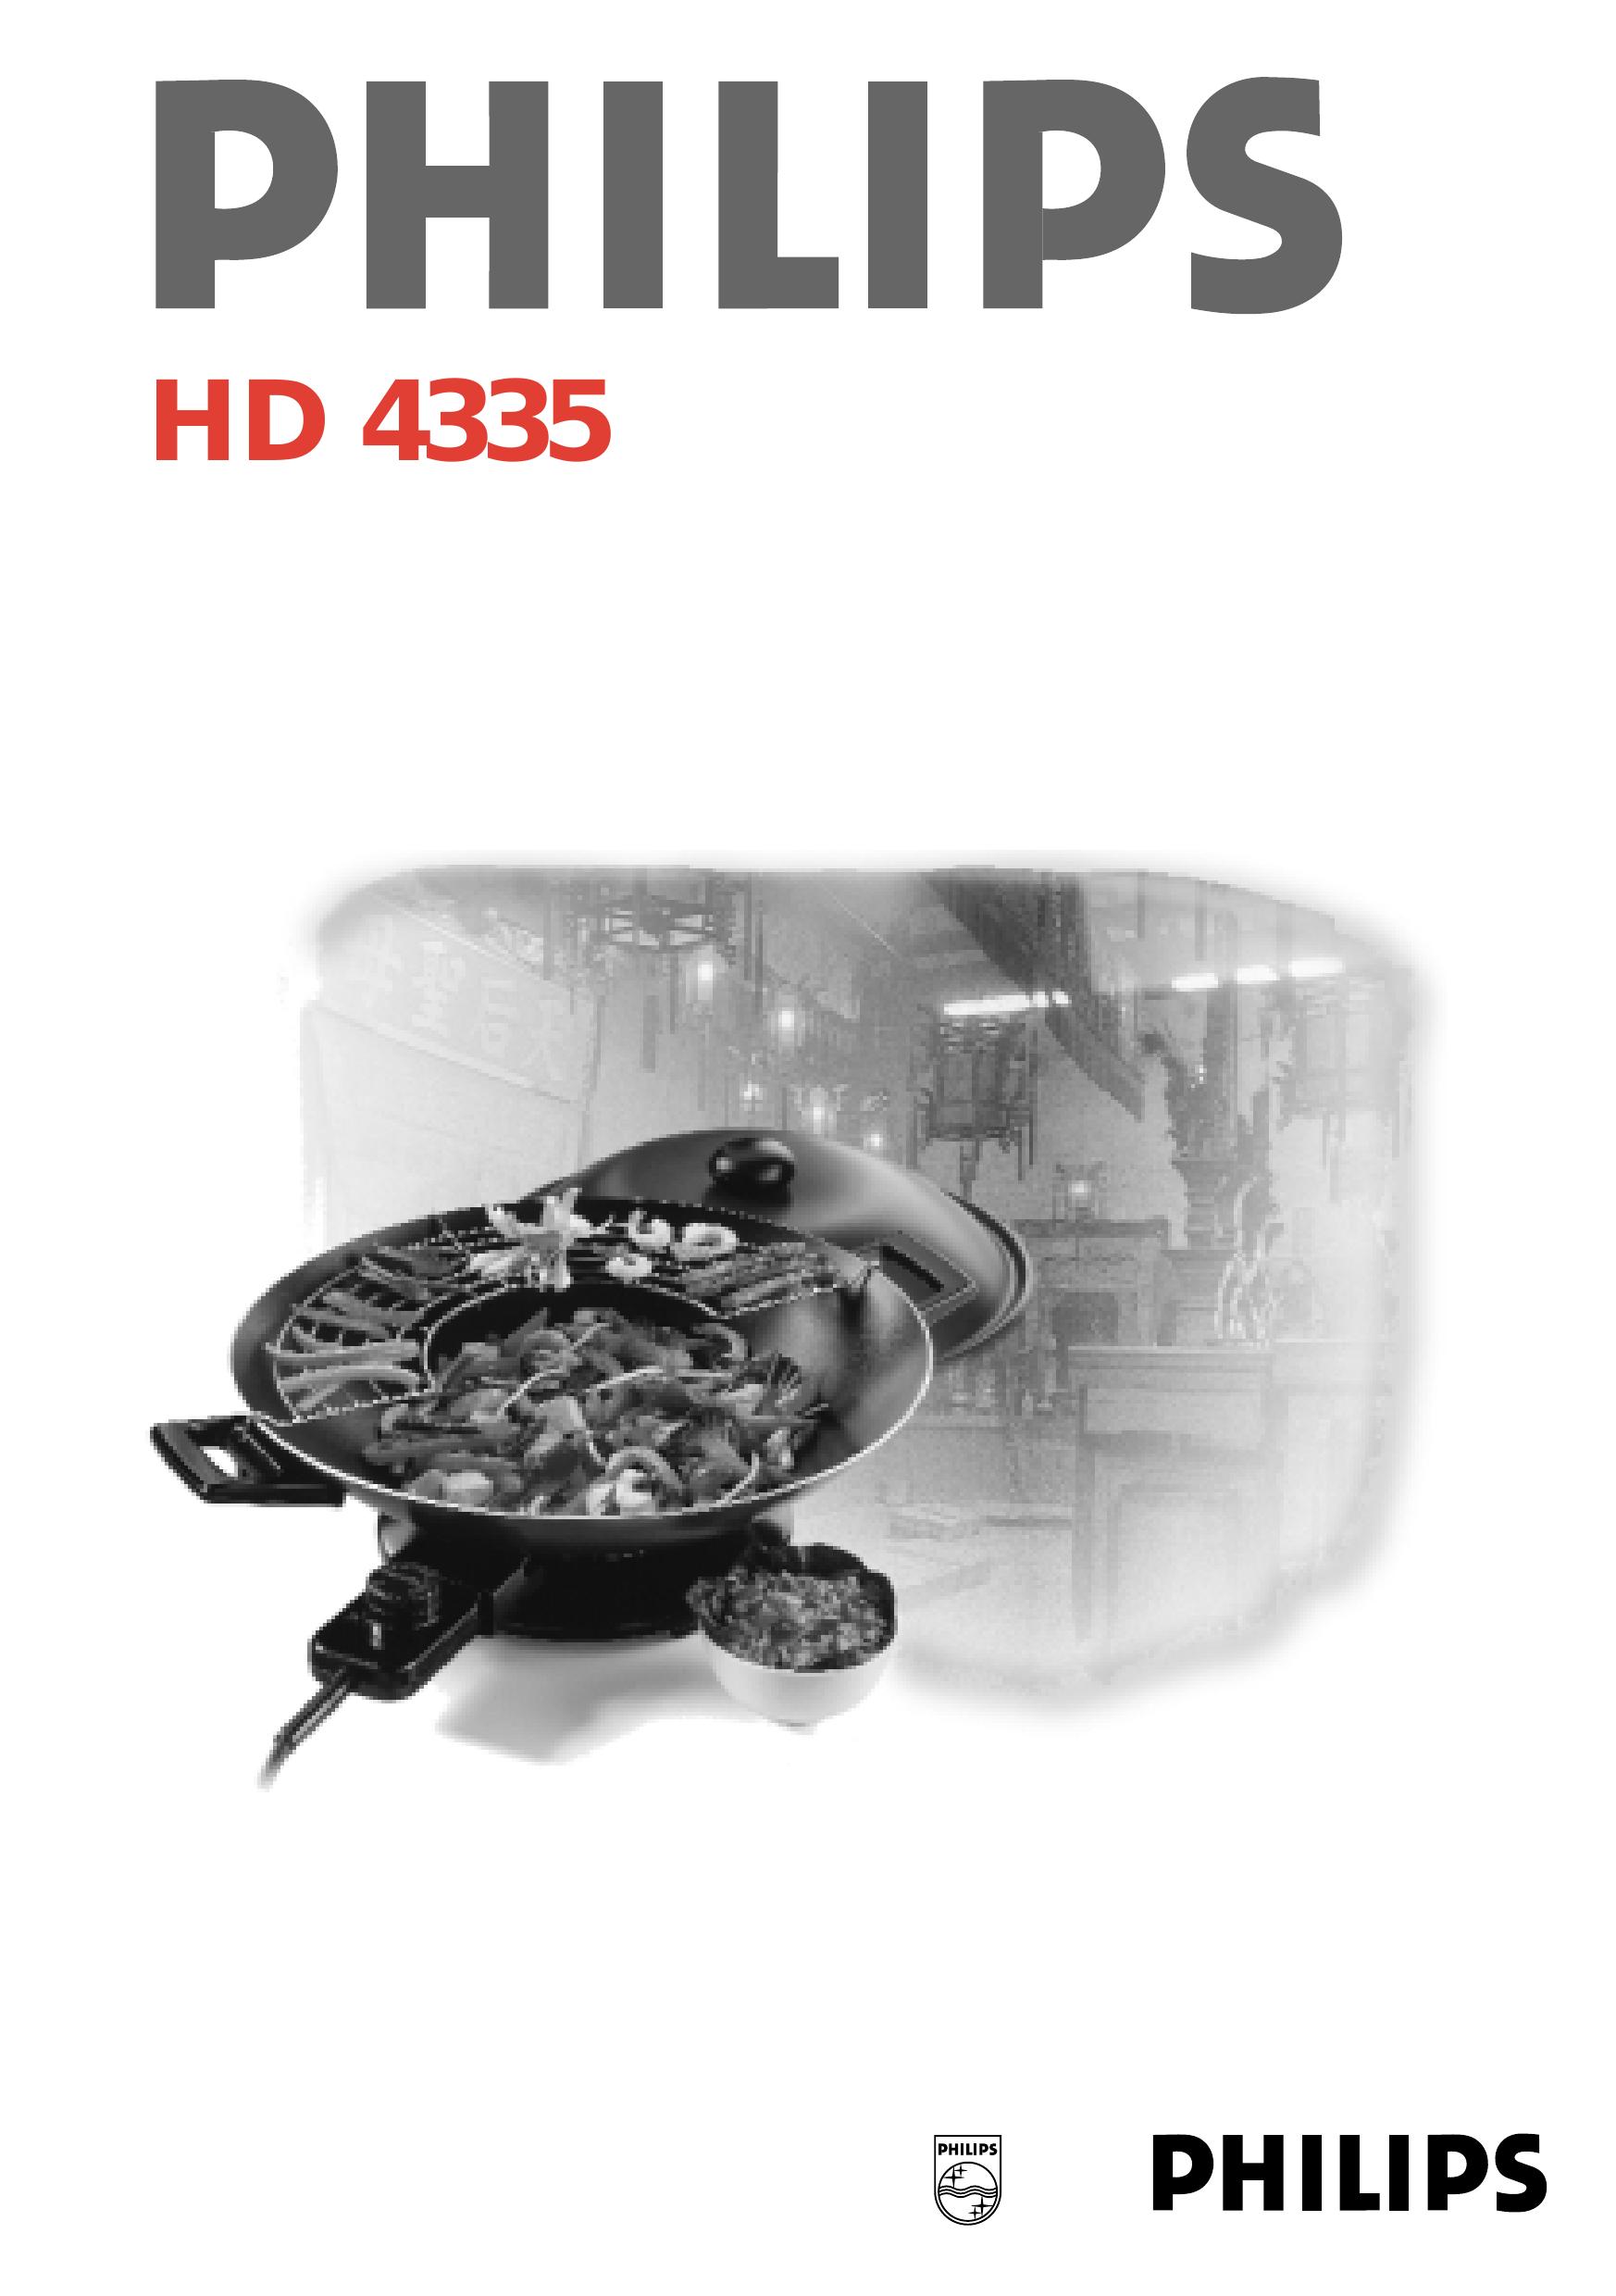 Philips HD 4335 Wok User Manual